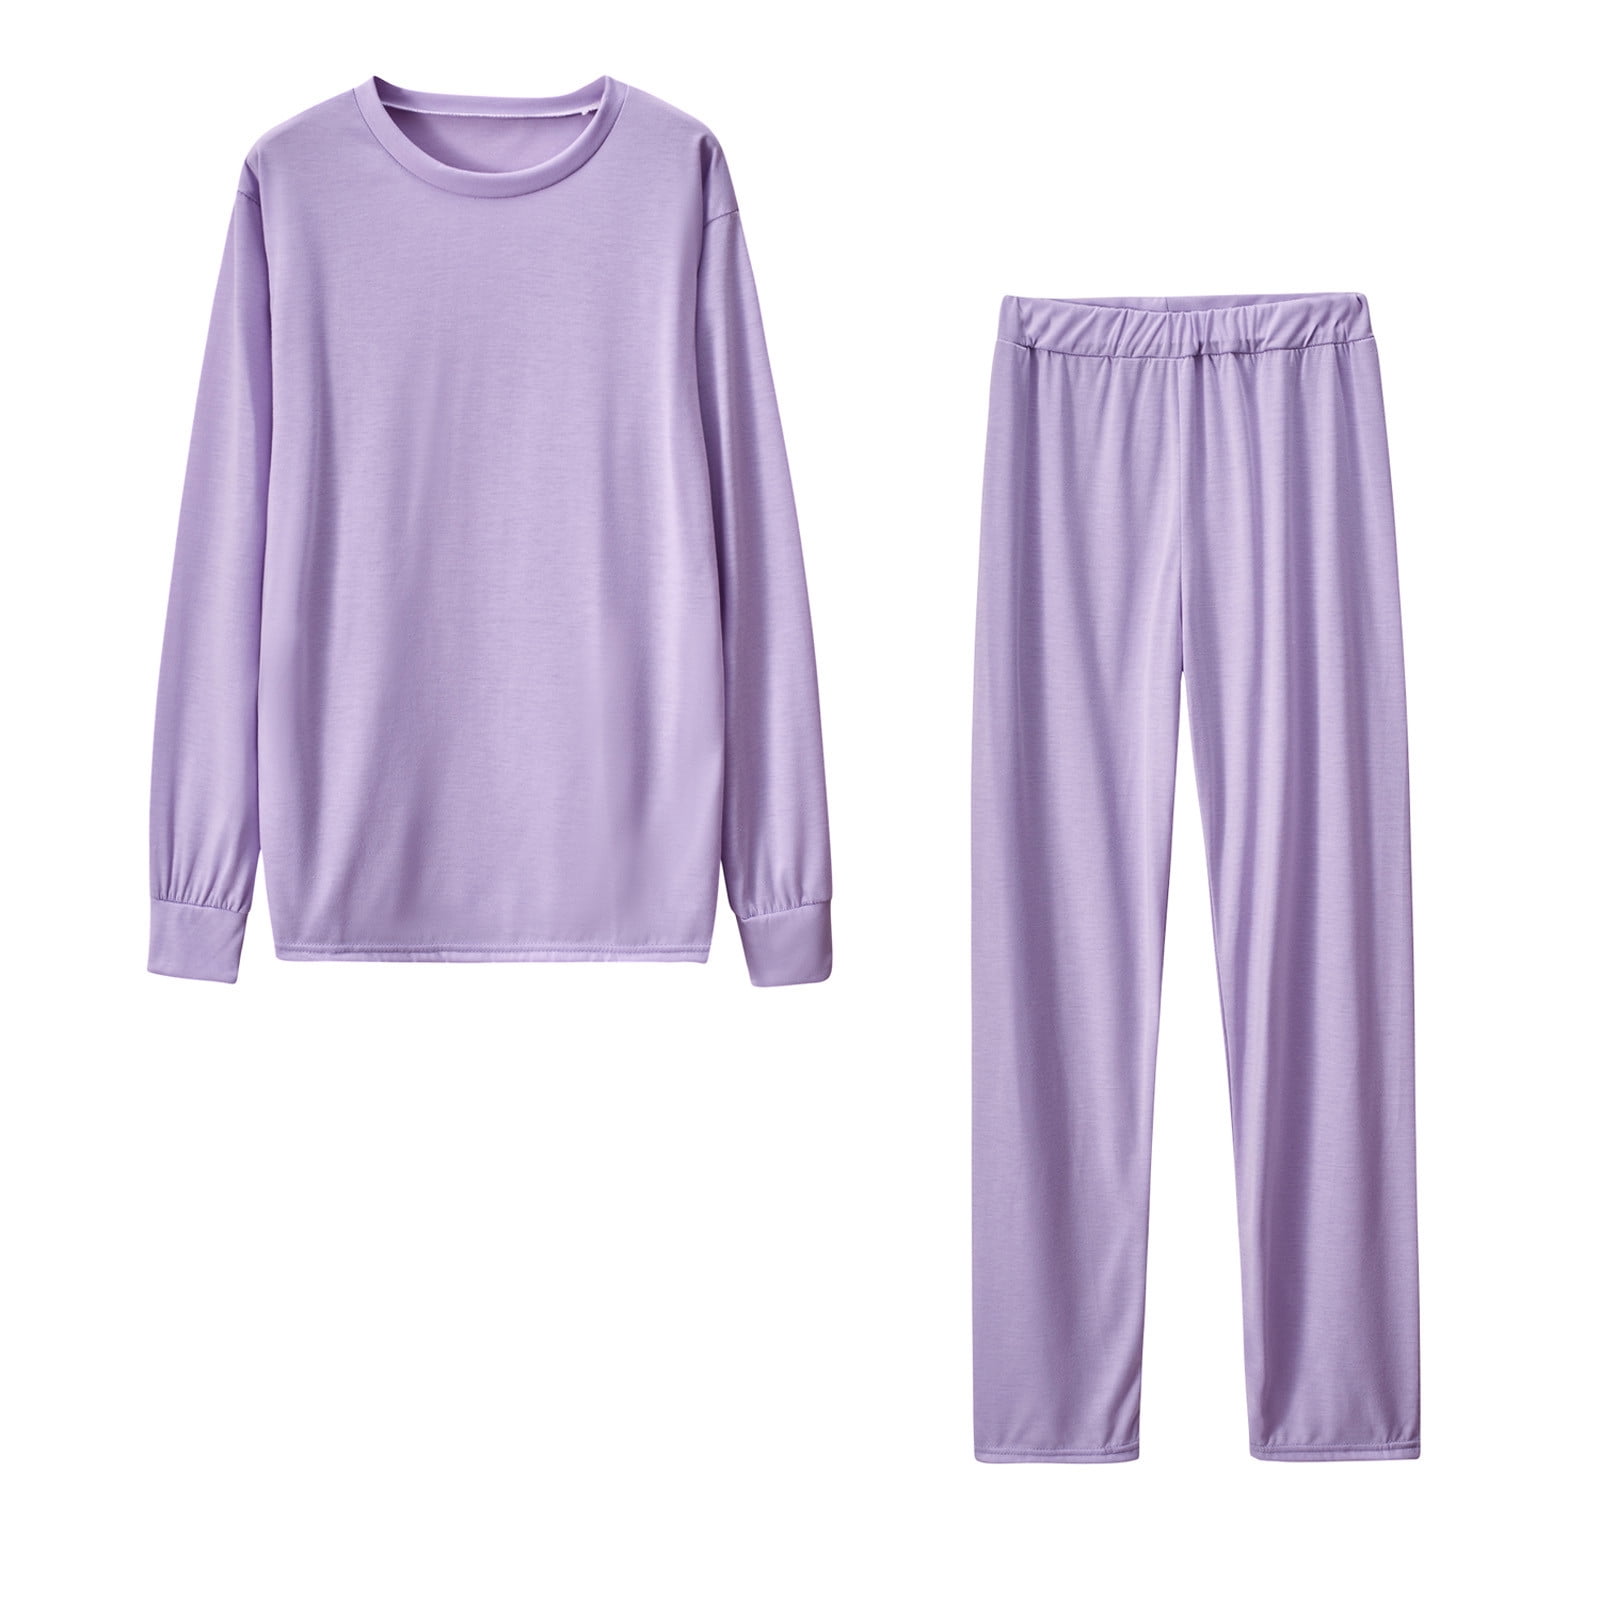 AherBiu Womens 2 Piece Pajamas Outfits Long Sleeve Tshirts with Bottom  Pants Comfy Solid Color Sleepwear Sets